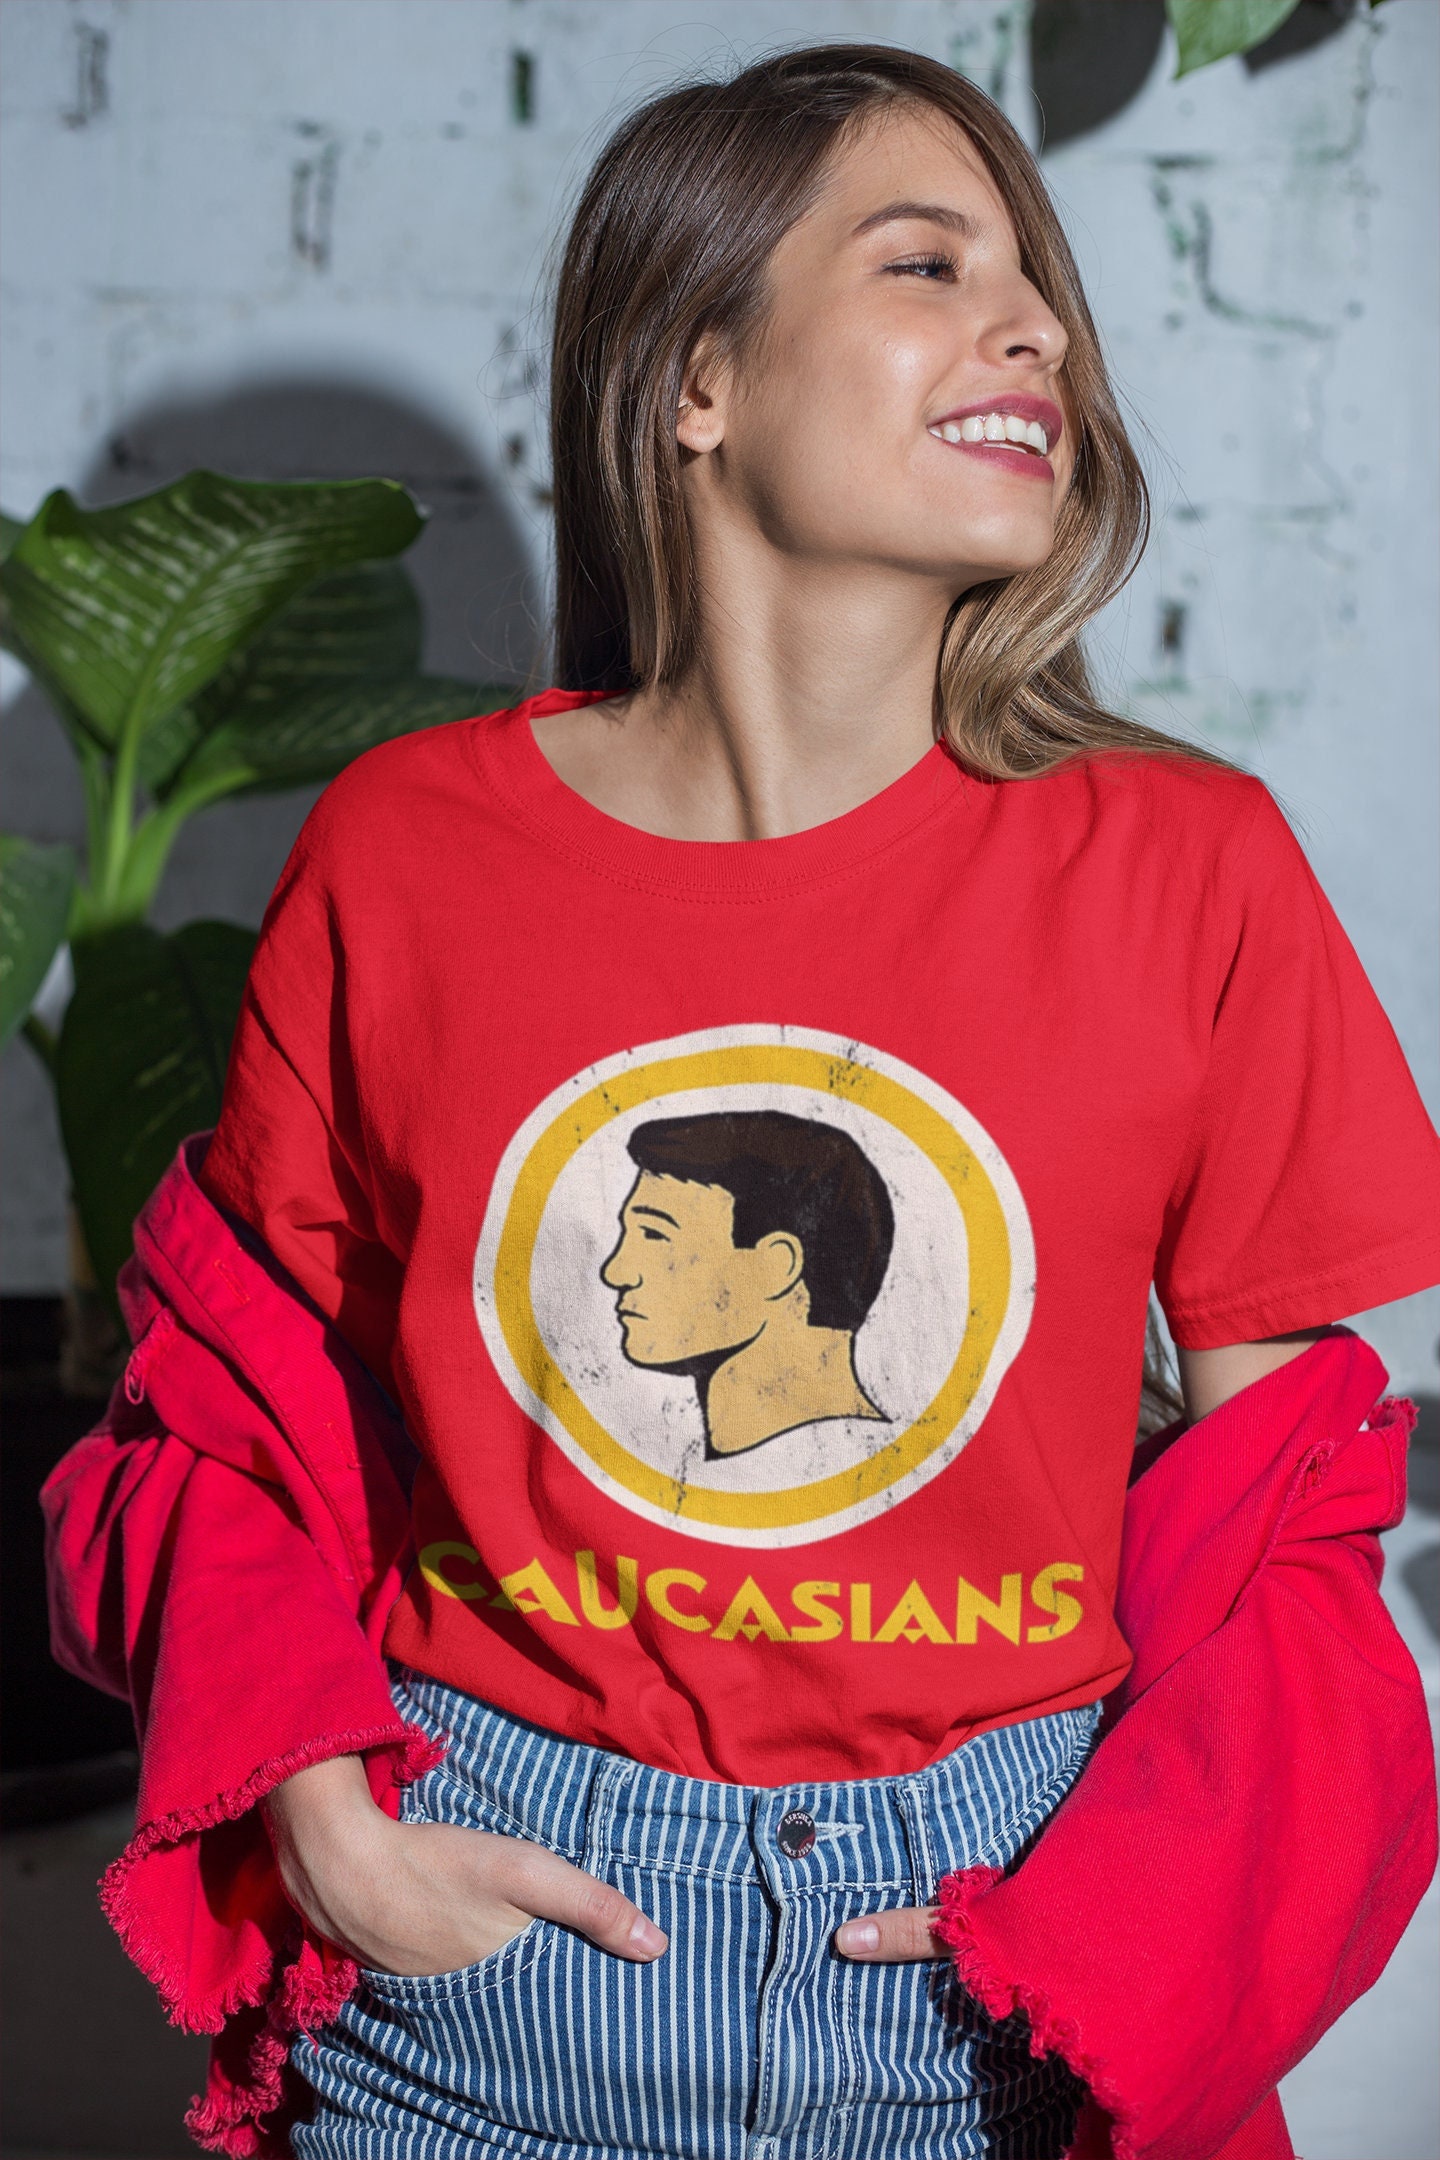 Caucasians (Indians parody) Short-Sleeve Unisex T-Shirt